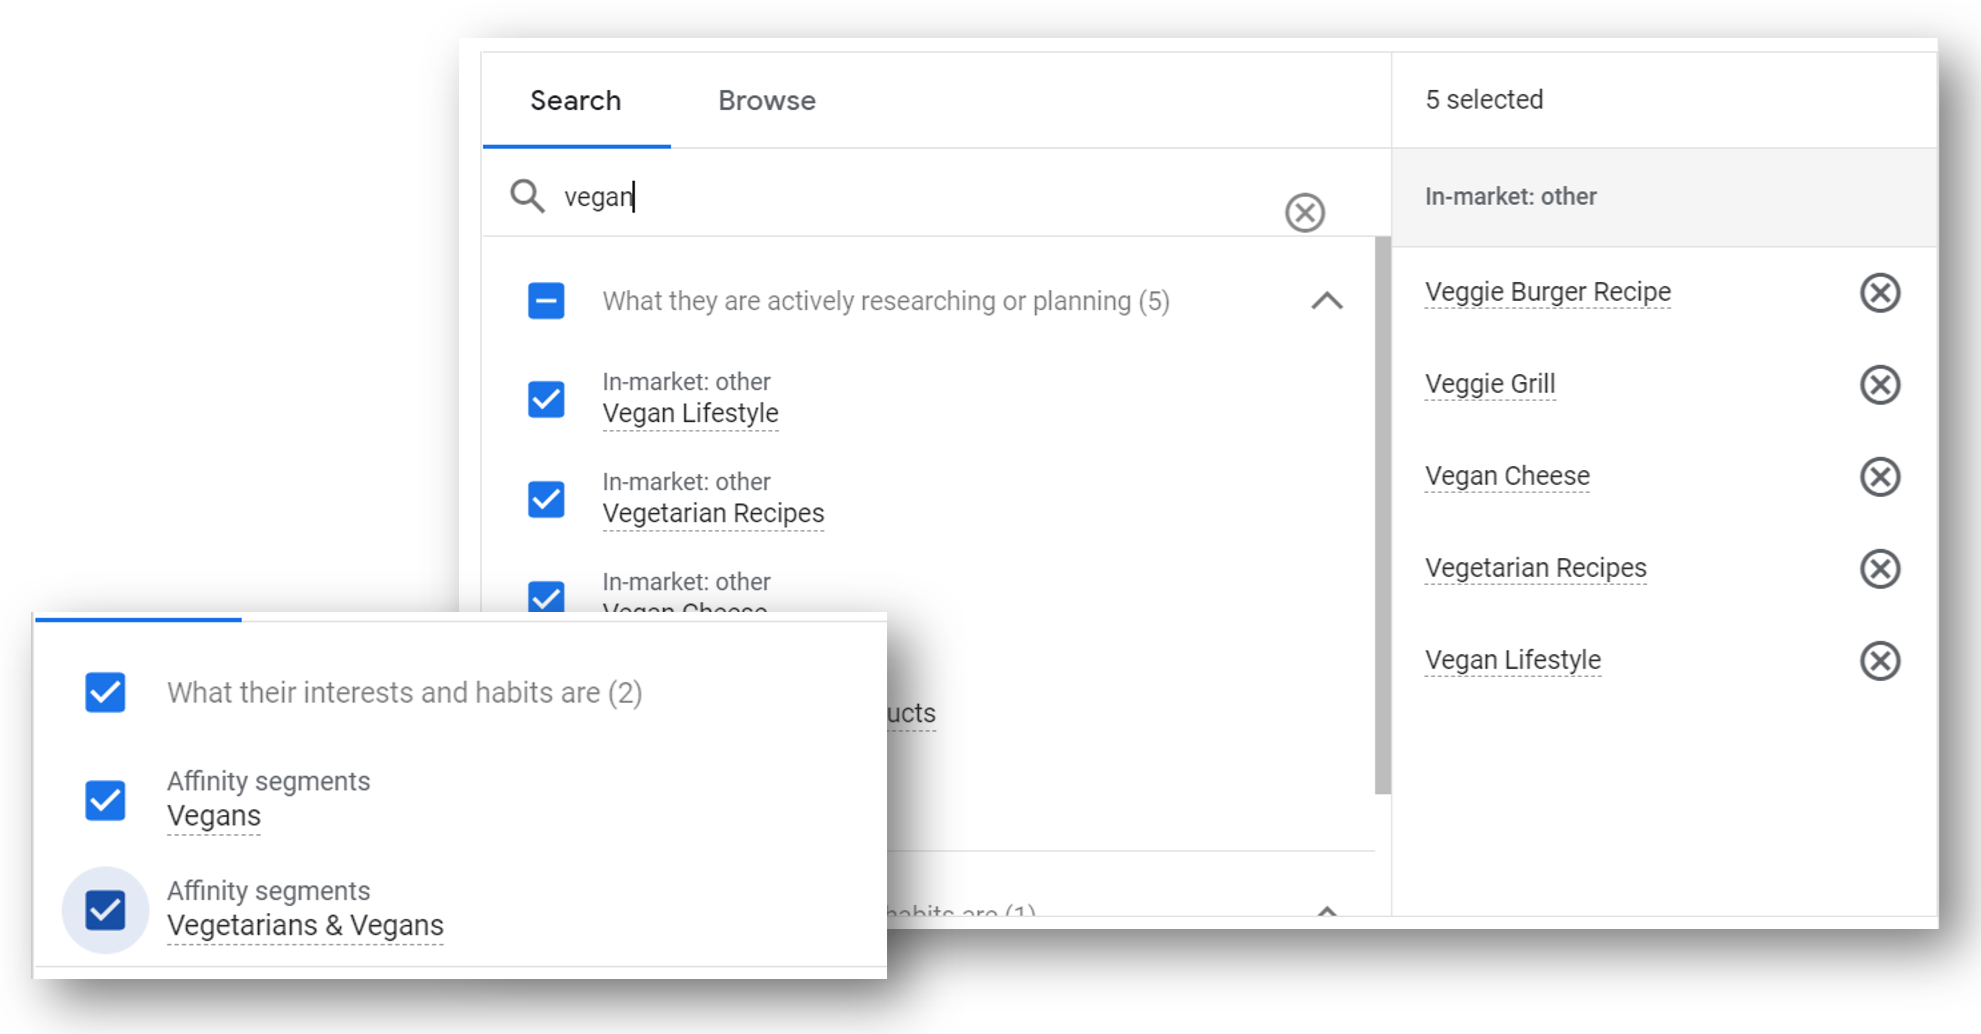 Google Ads UI showing "vegan" segments selection.